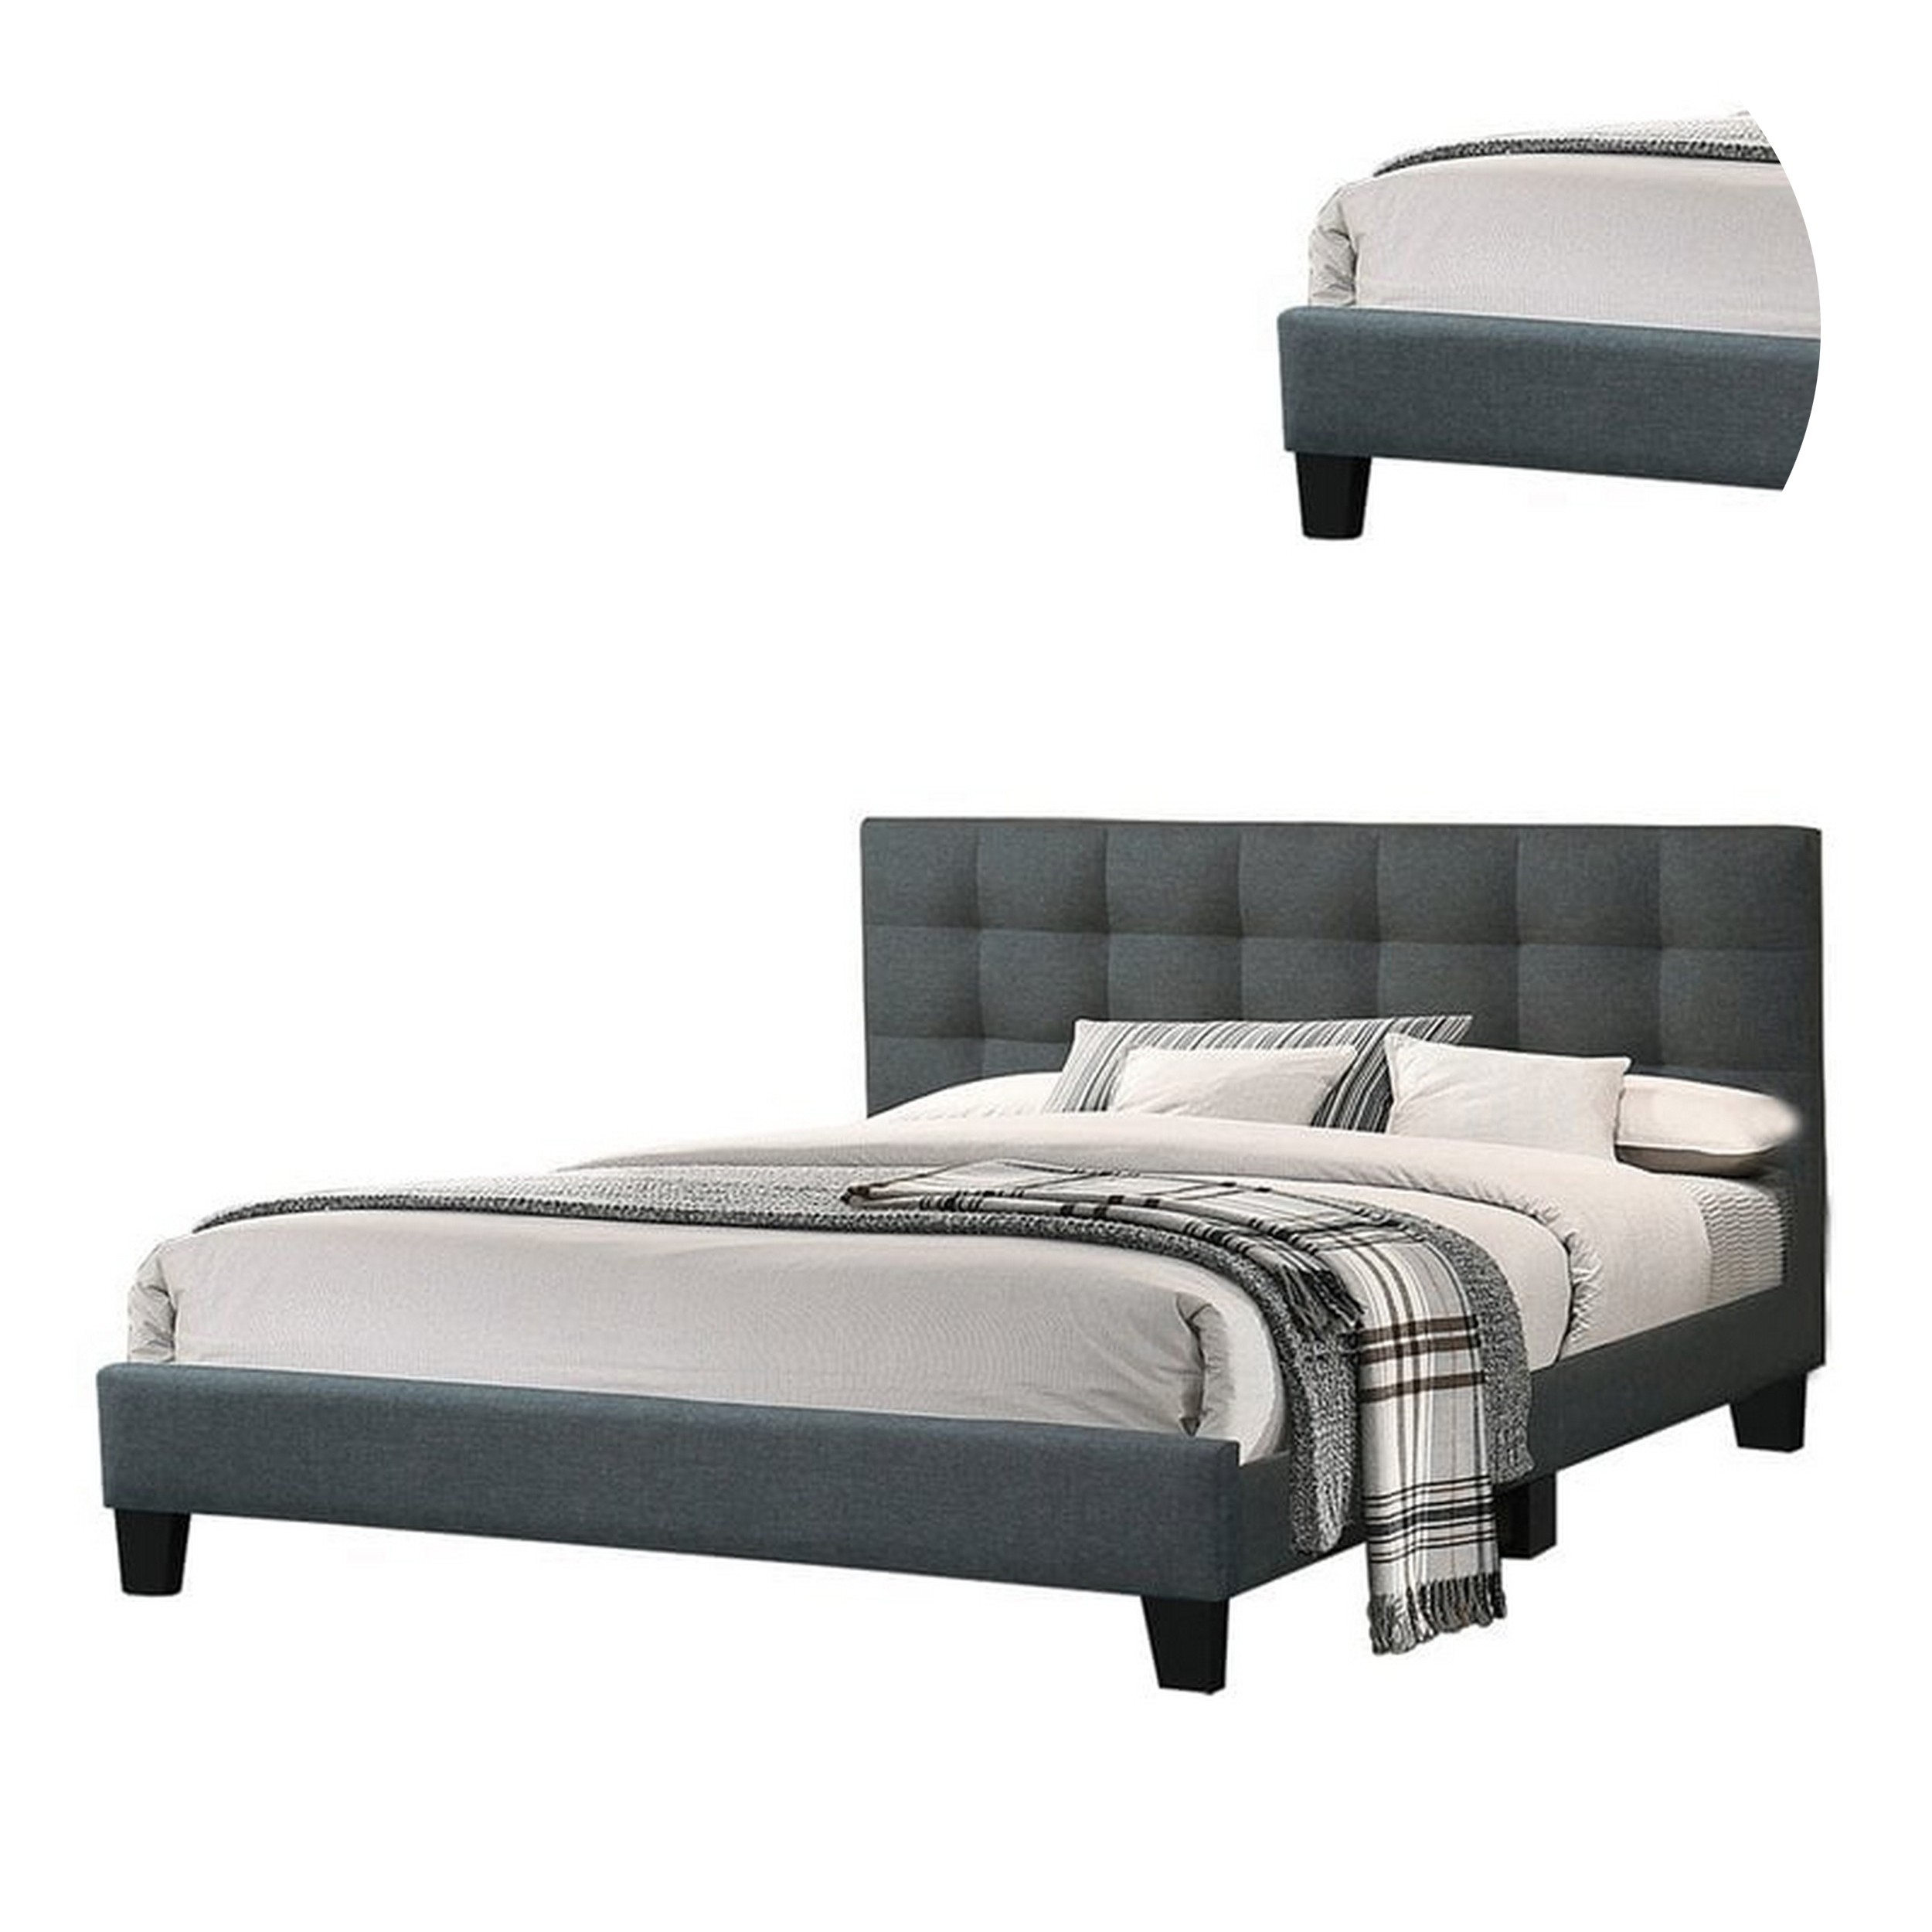 Dex Modern Platform Queen Size Bed, Plush Tufted Upholstery, Charcoal Gray- Saltoro Sherpi